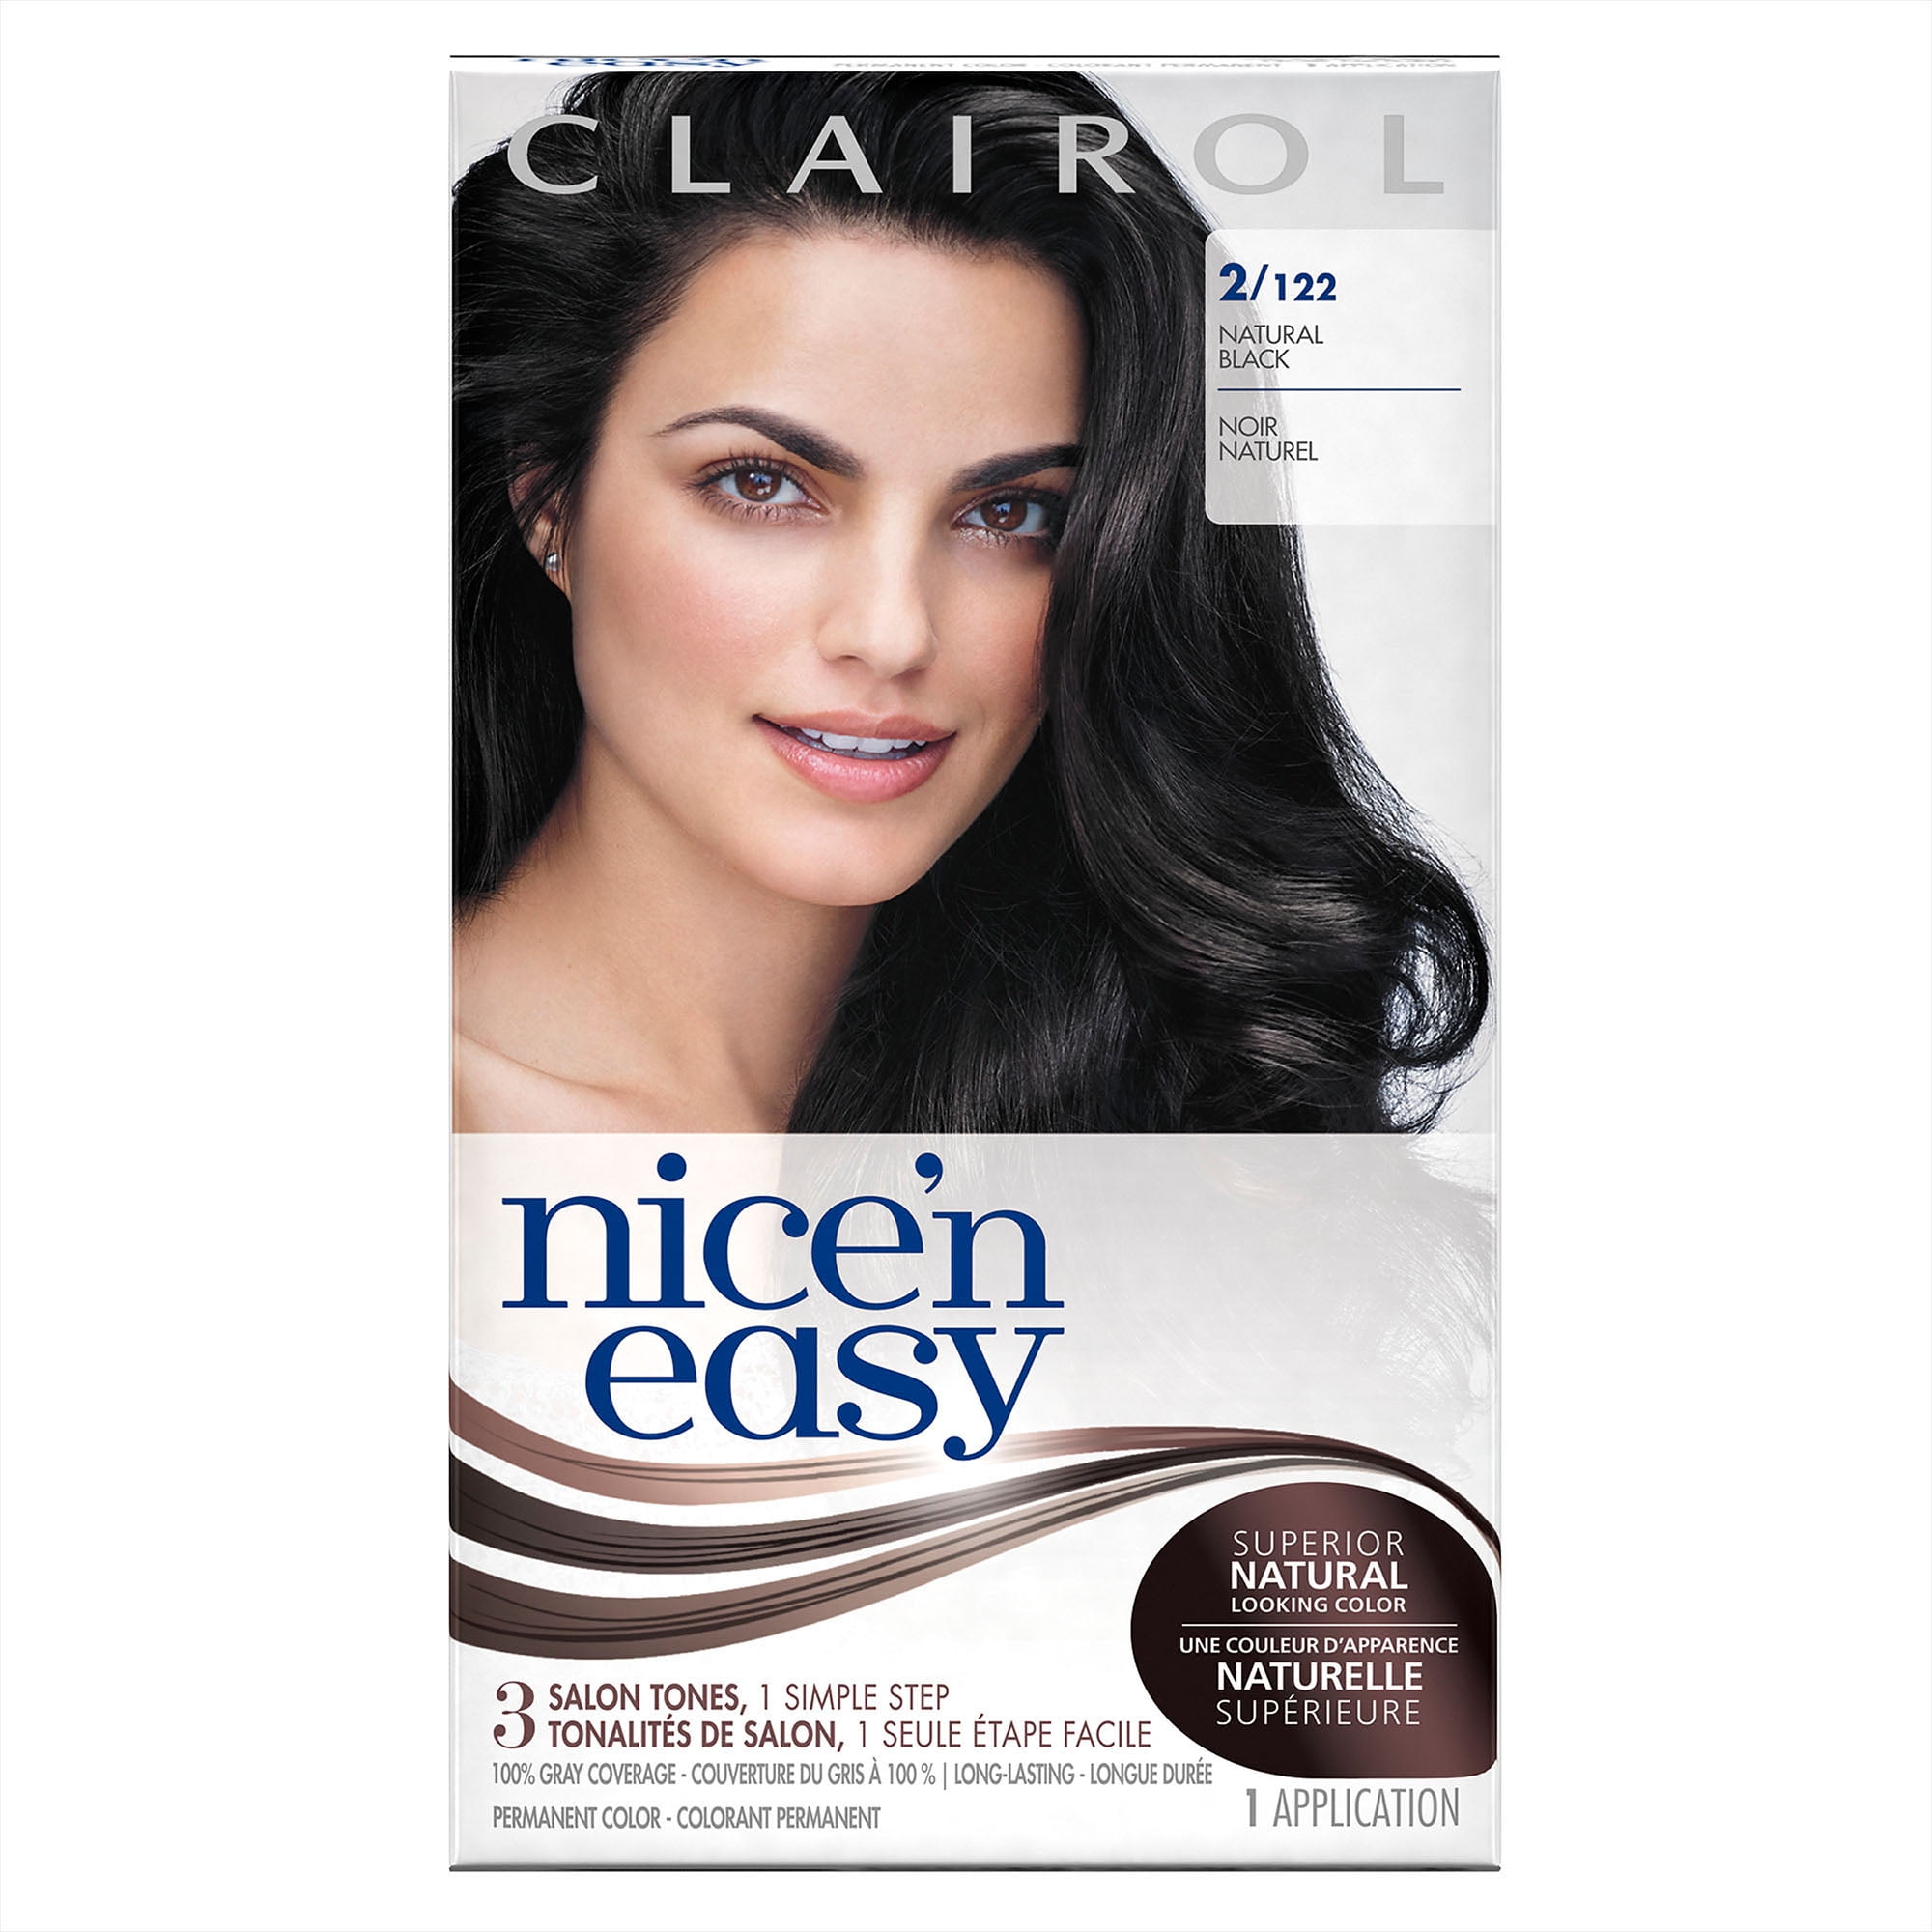 Clairol Nice 'n Easy Permanent Hair Color, Natural Black, 2 